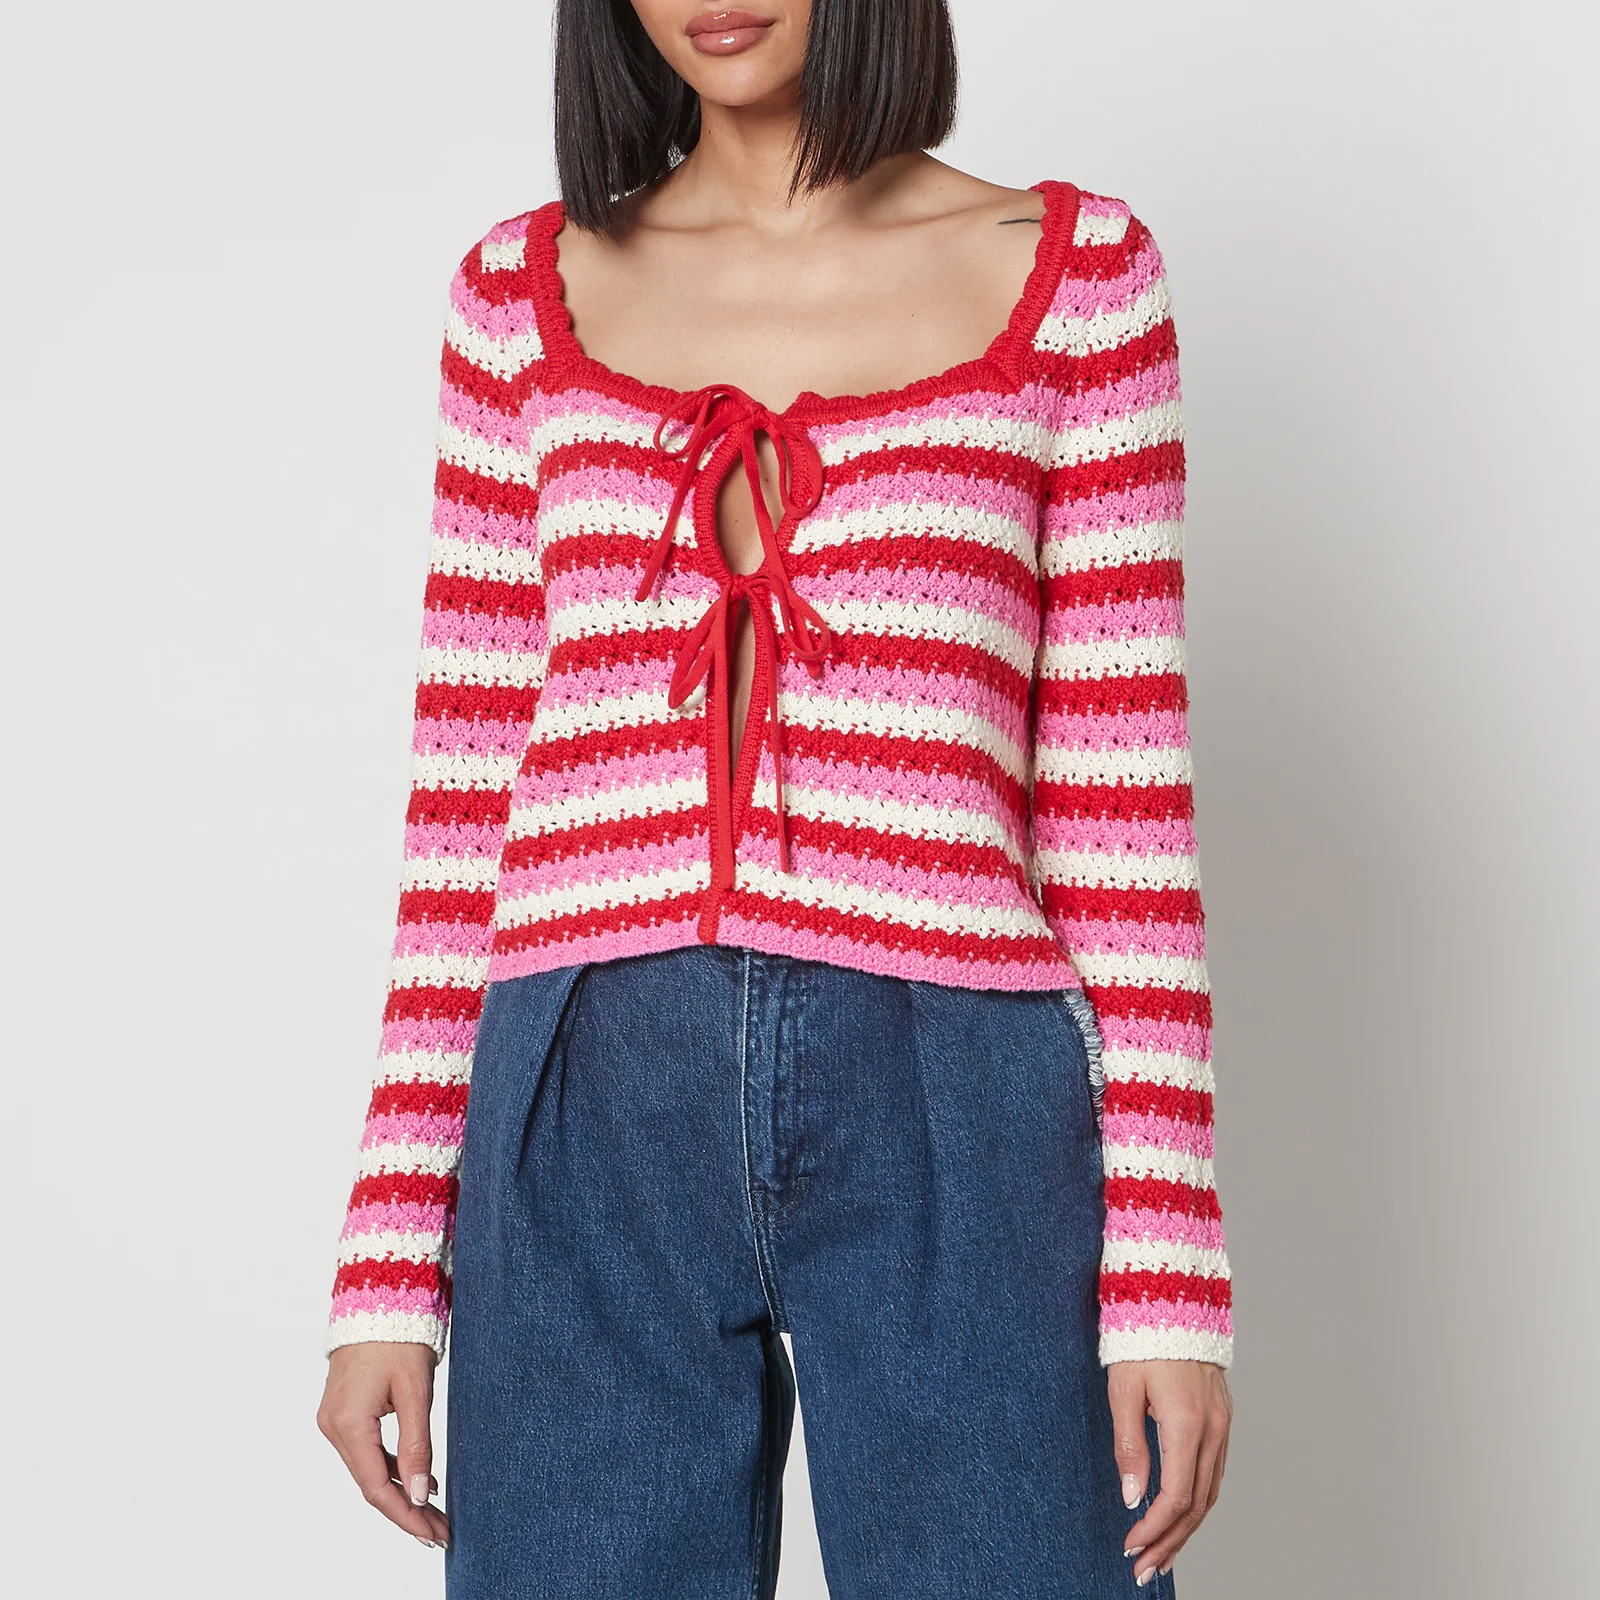 Kitri Dionne Cotton-Blend Crochet Cardigan Image 1